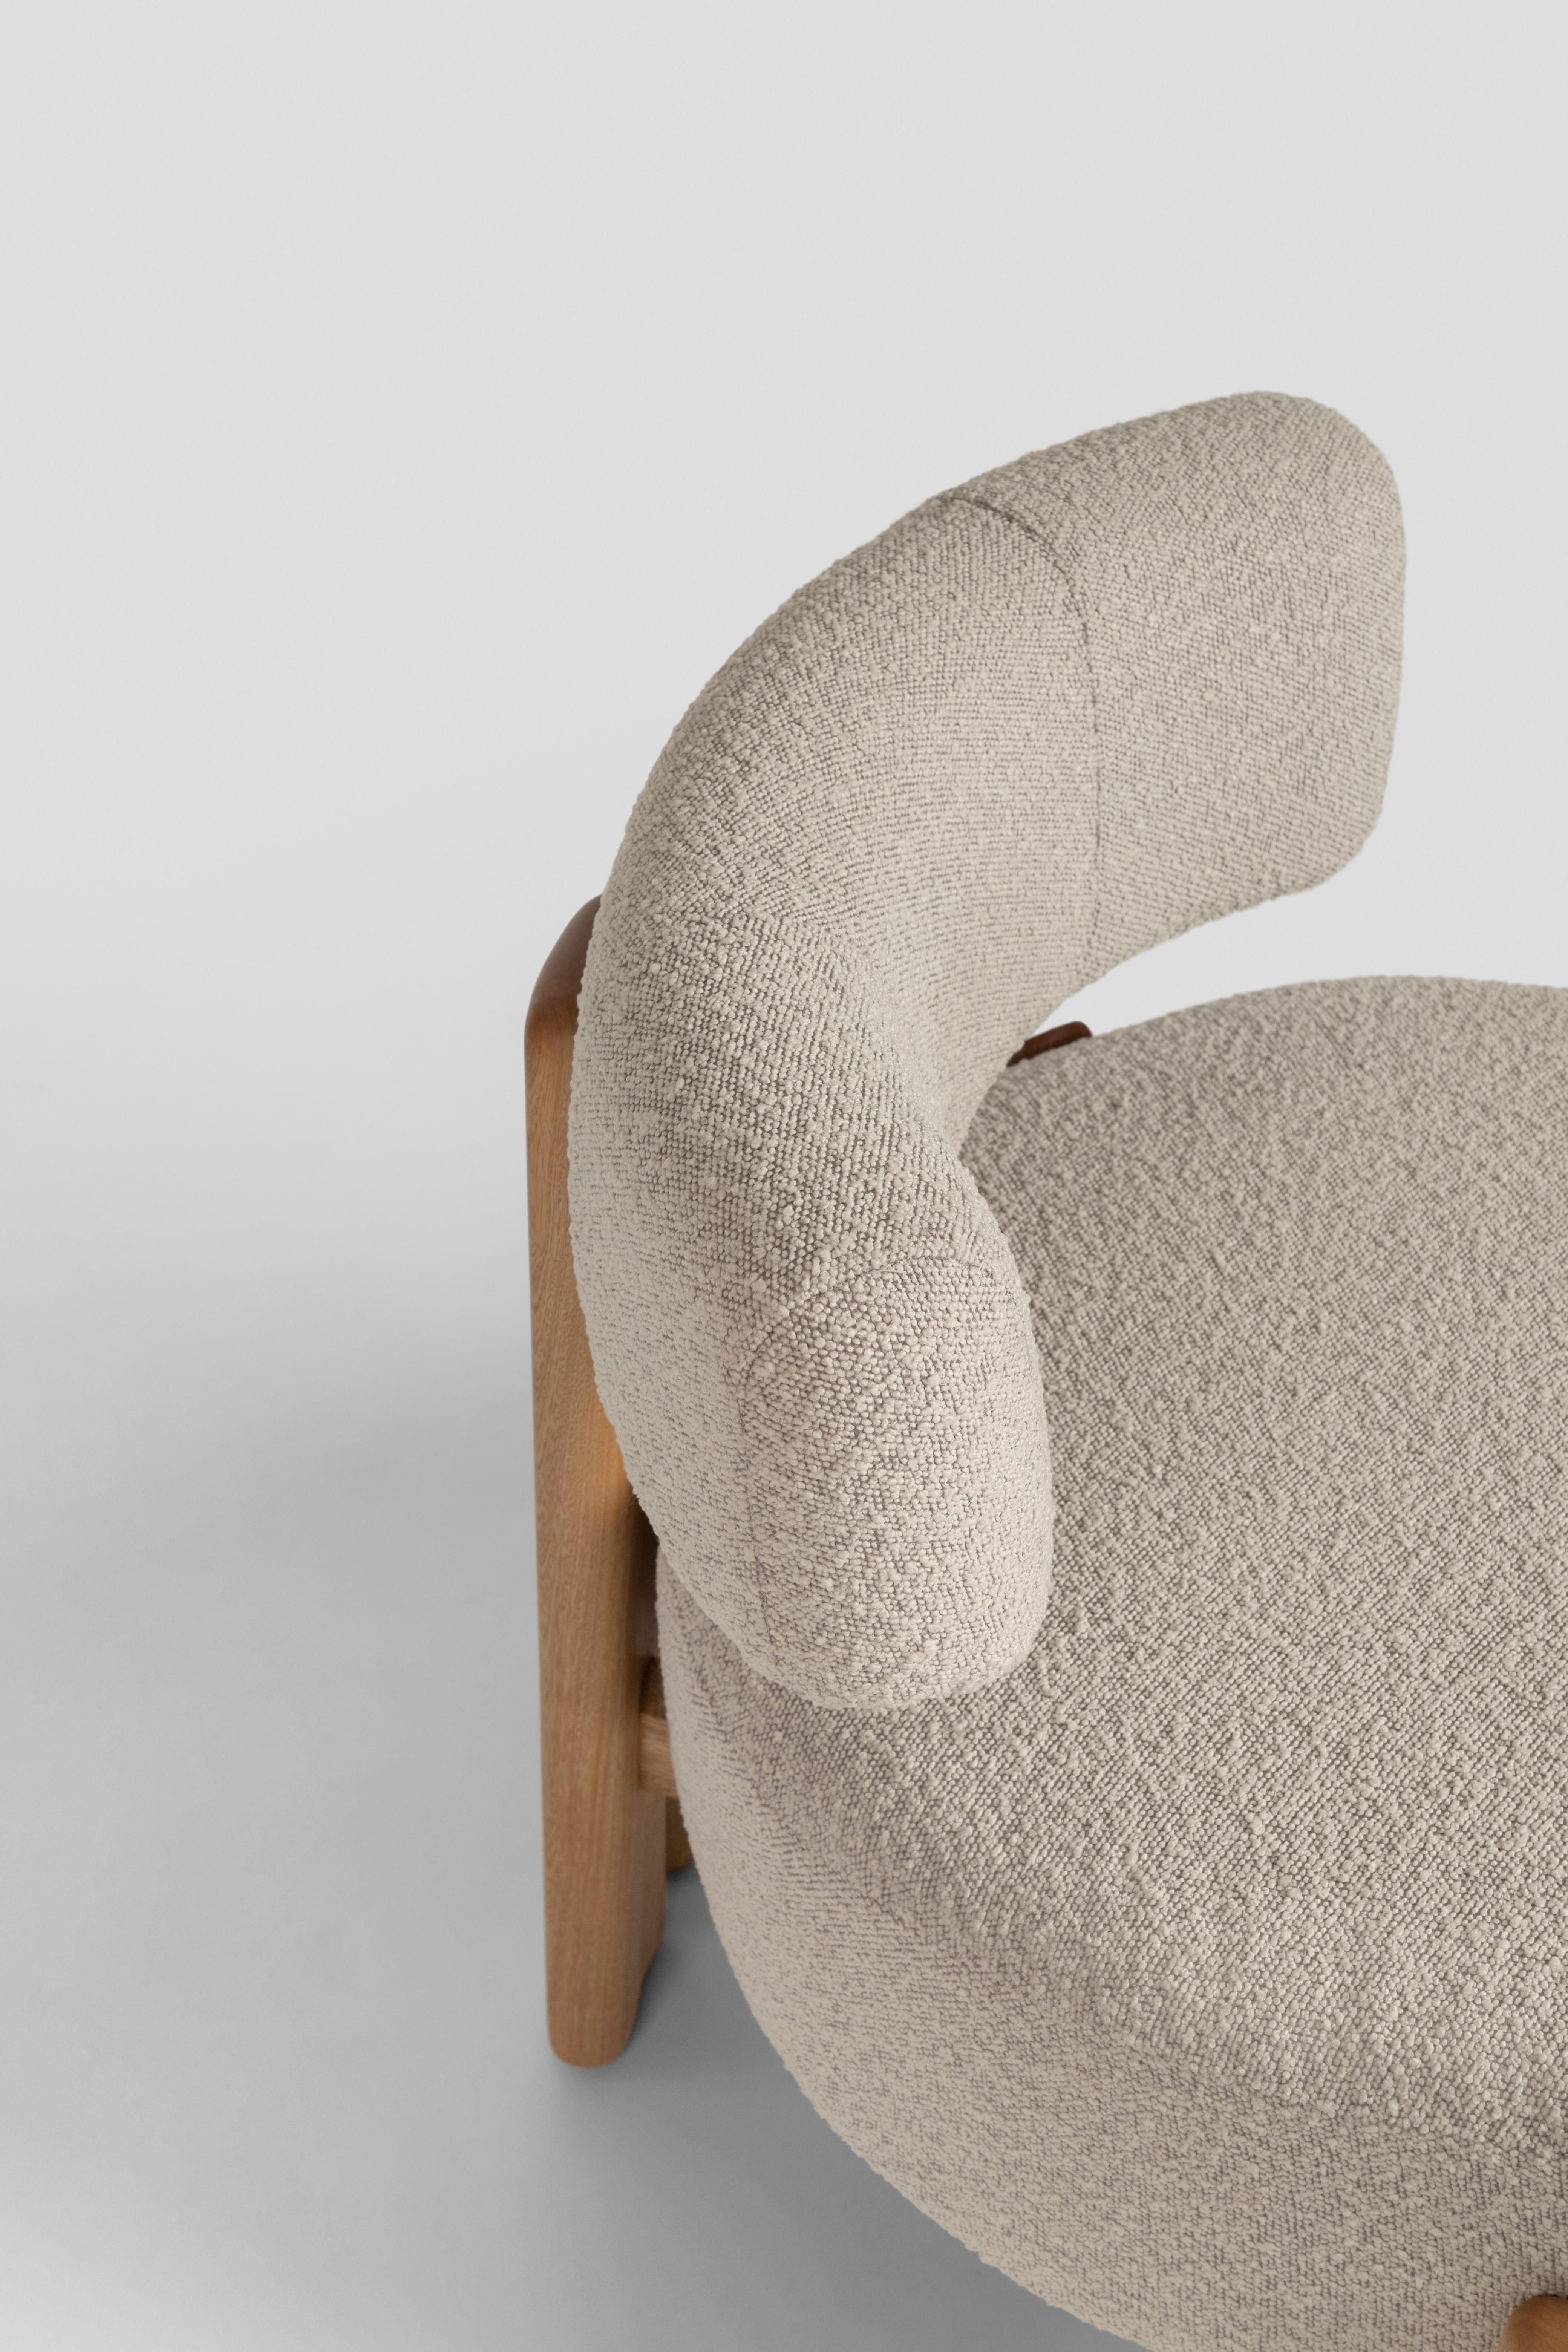 Modern De la Paz Low Chair Solid Wood, Contemporary Mexican Design For Sale